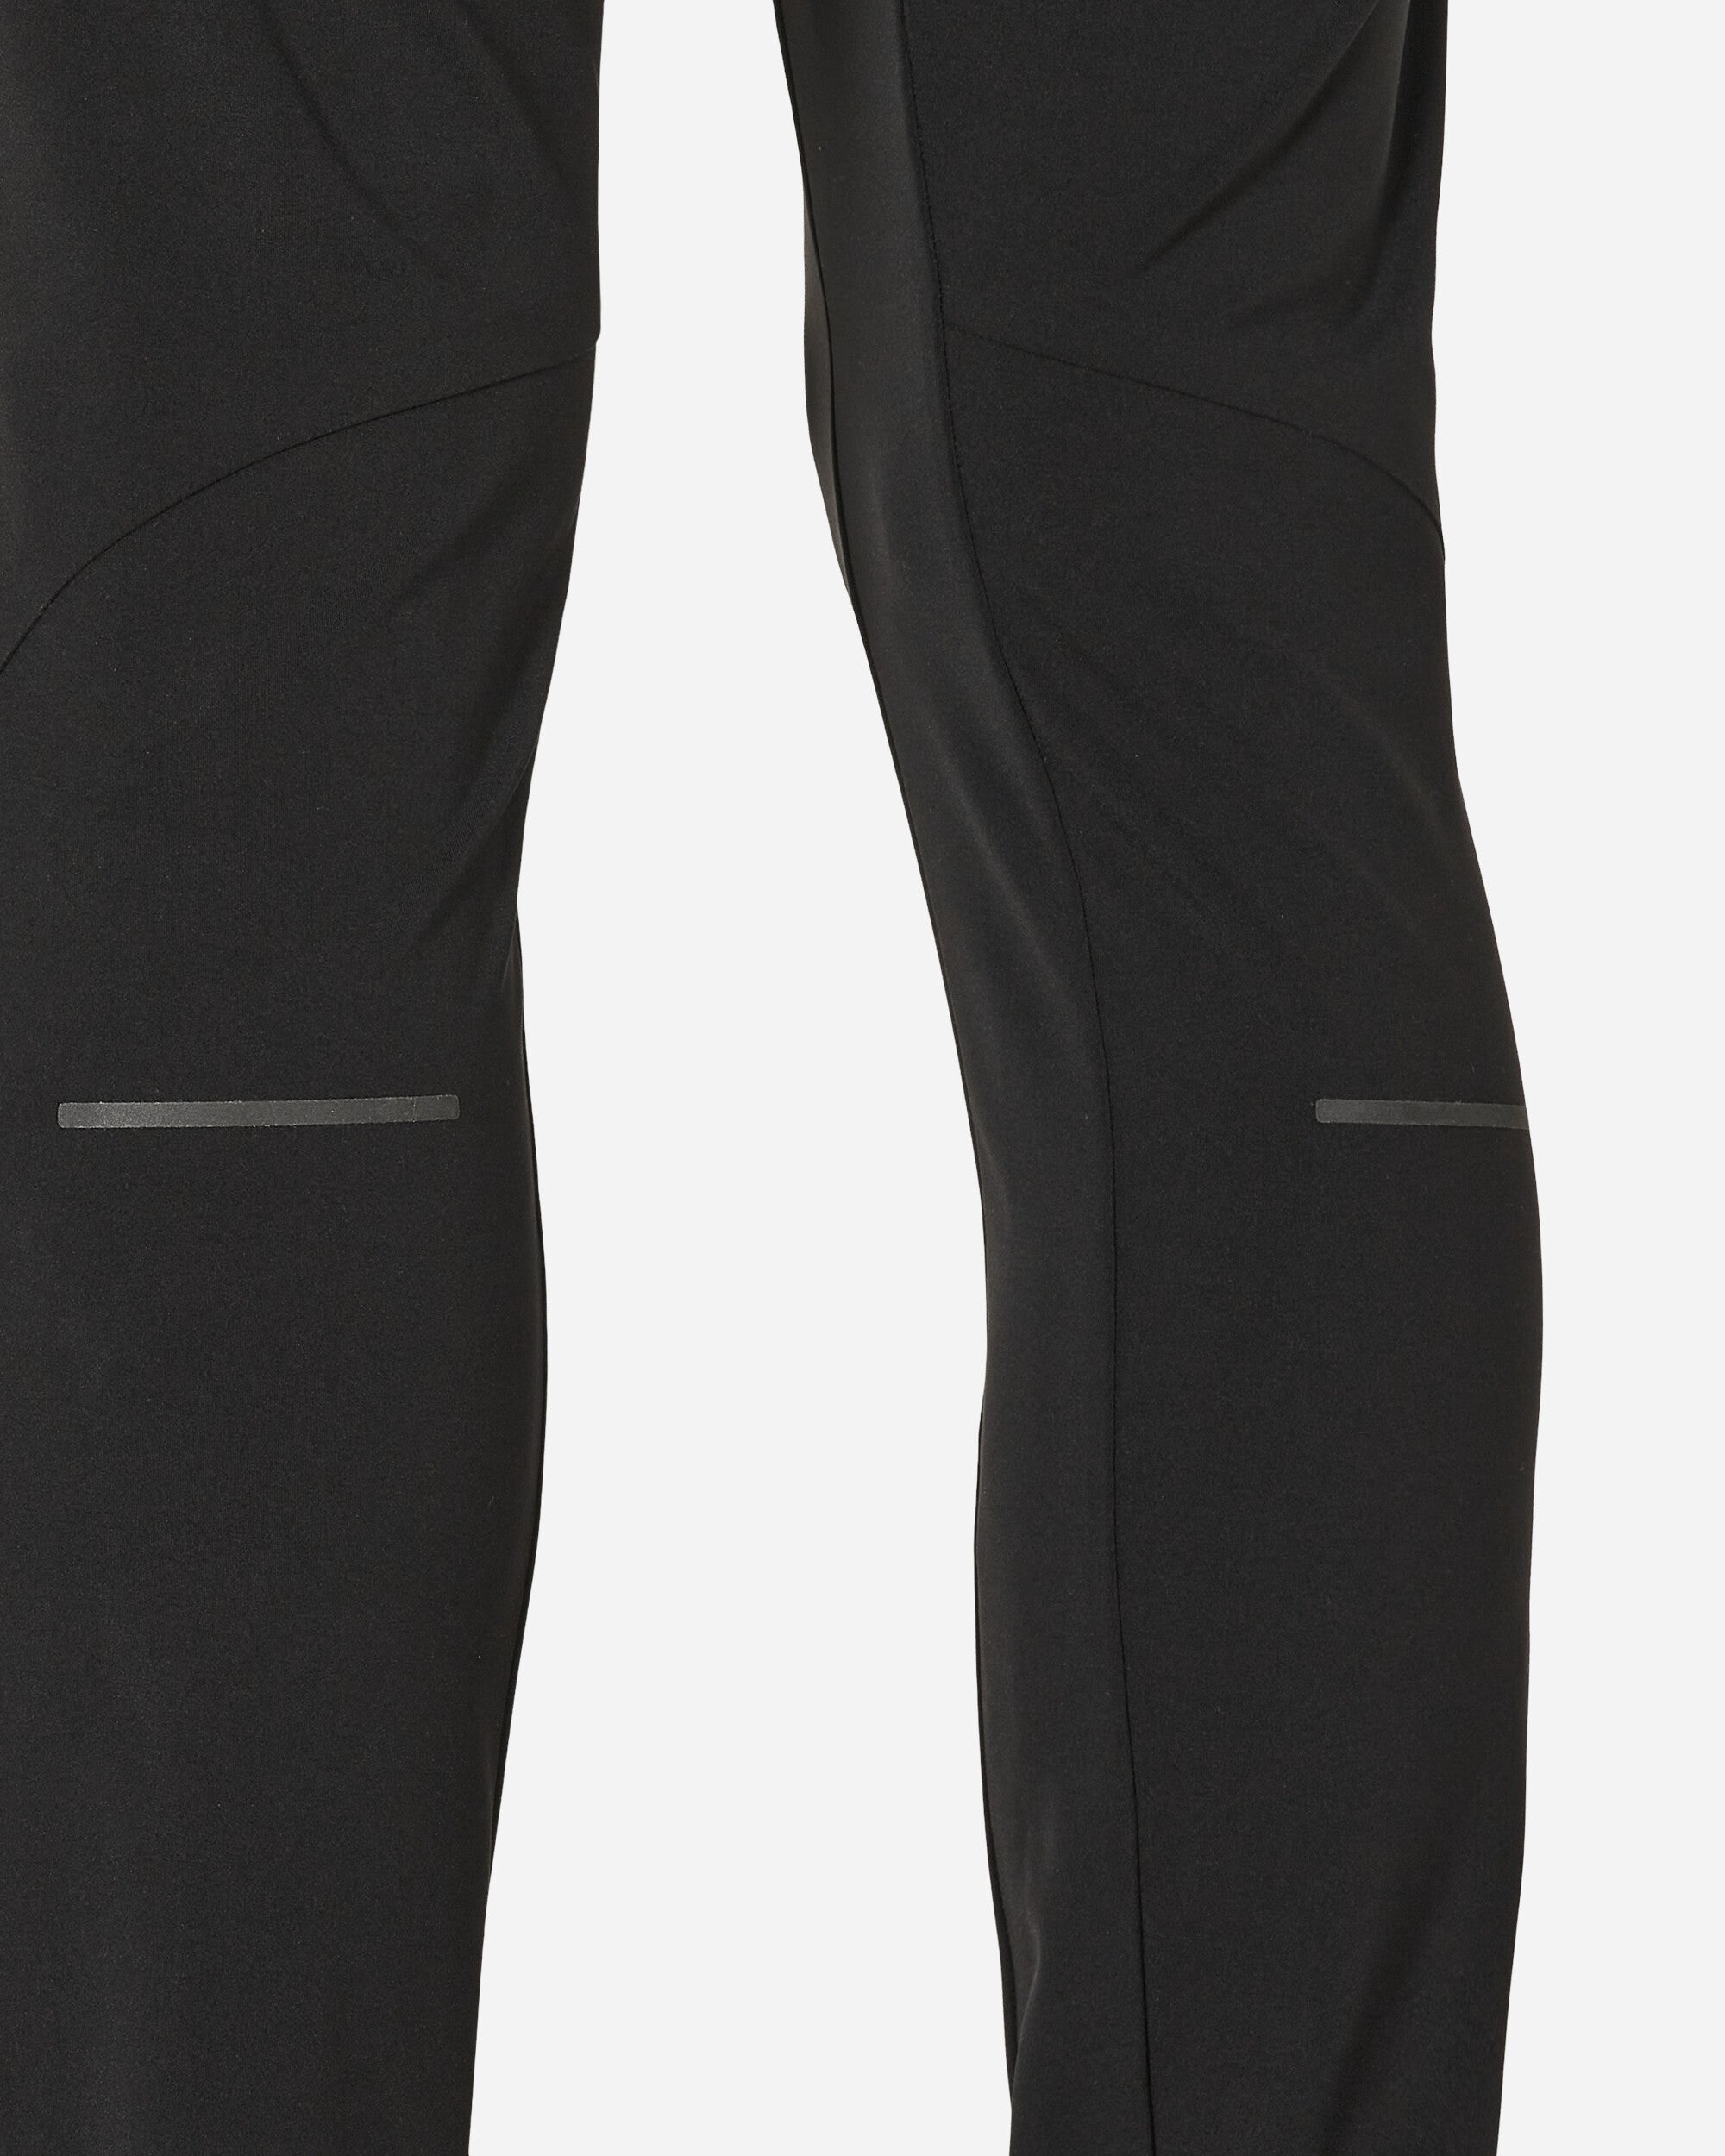 adidas Athletics Tight Black Pants Sweatpants IT1932 001